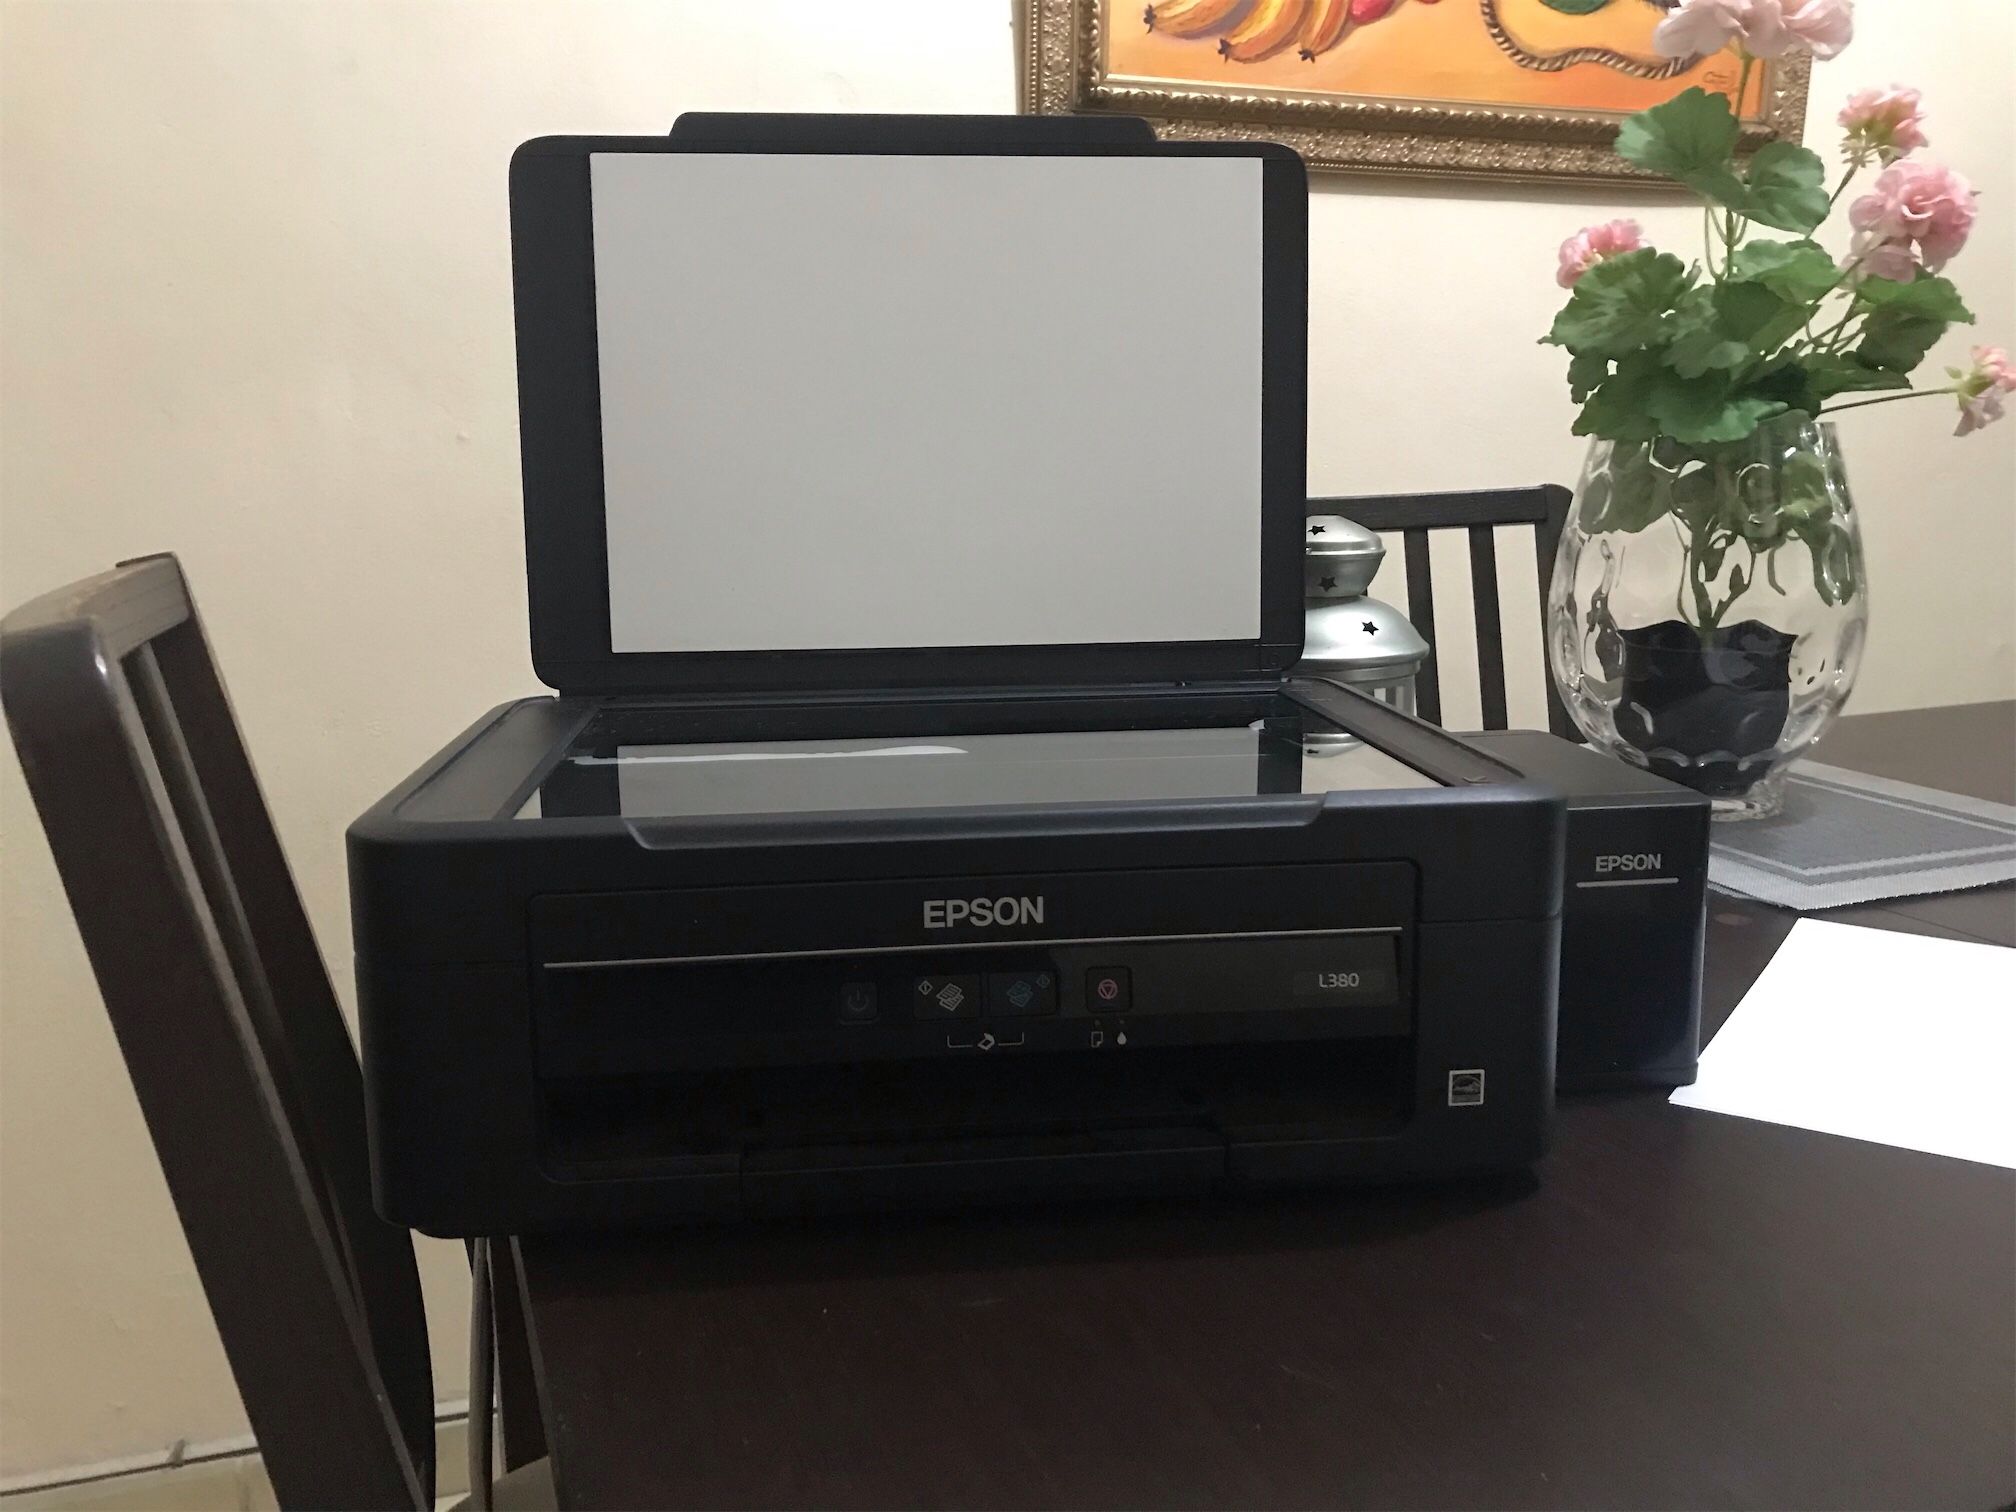 impresoras y scanners - Impresora EPSON L380 (Con Scanner) 